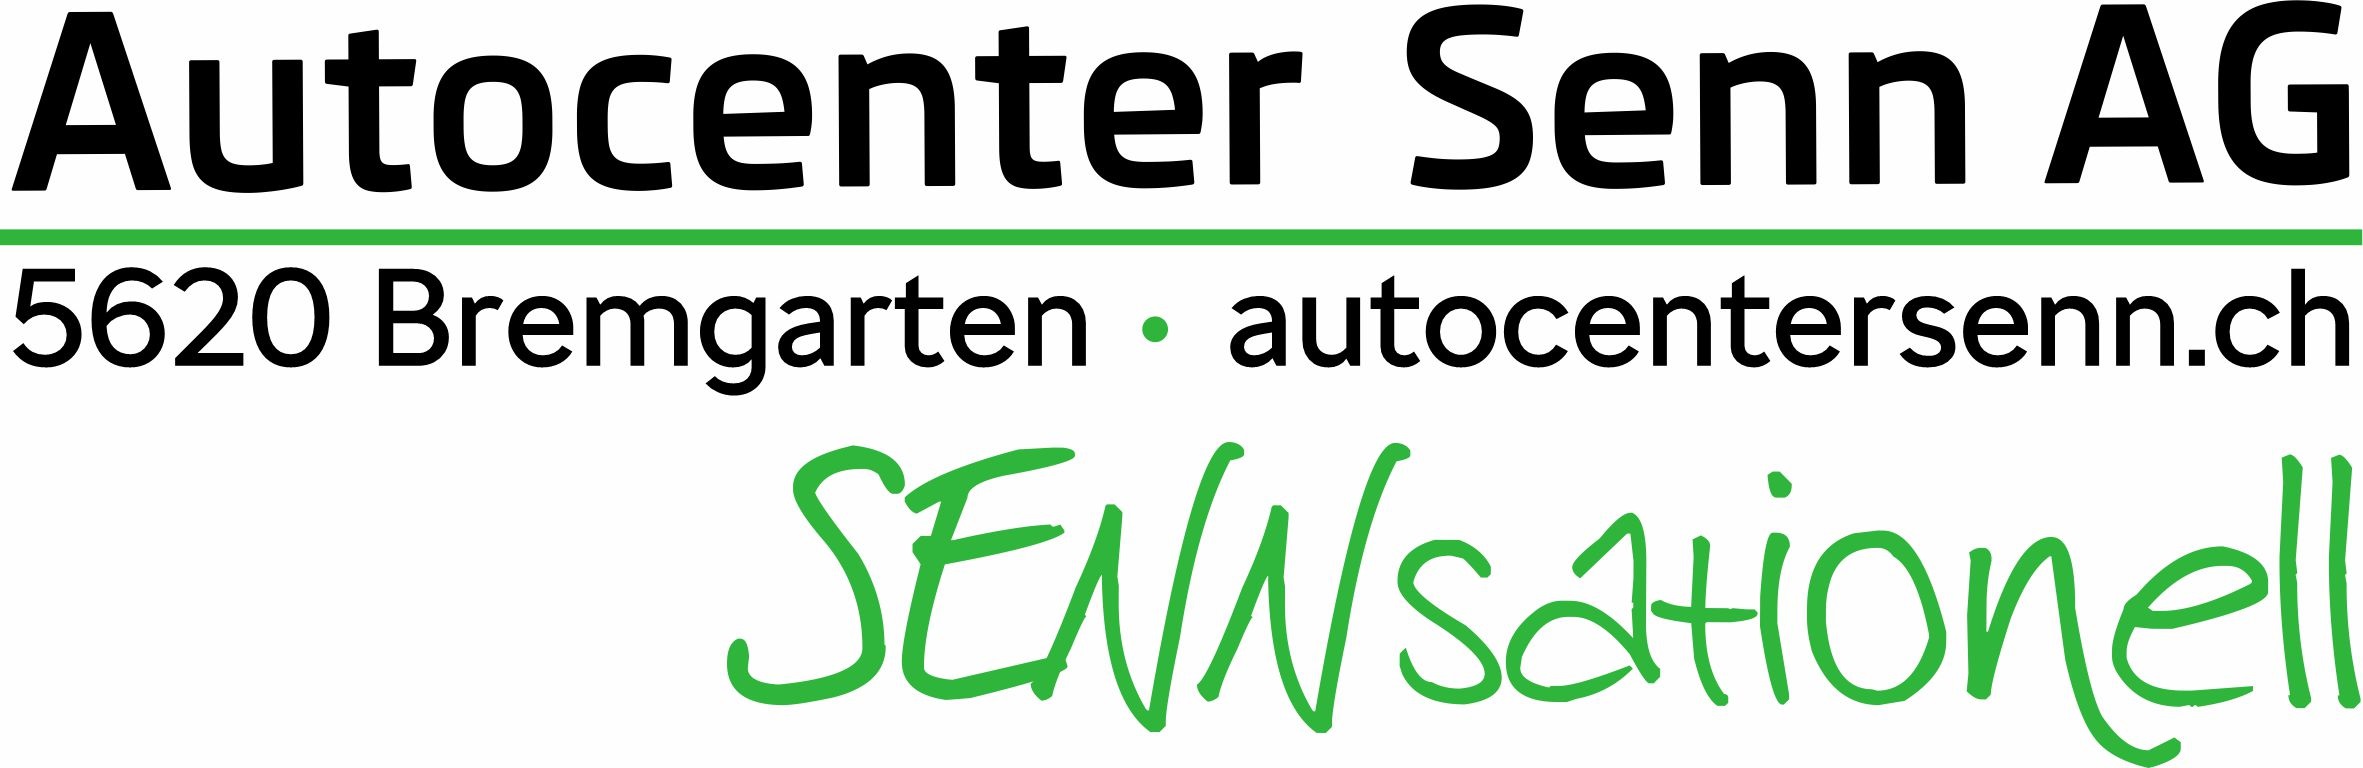 Logo Autocenter Senn AG. Link für zur Webseite www.autocentersenn.ch in neuem Tab.